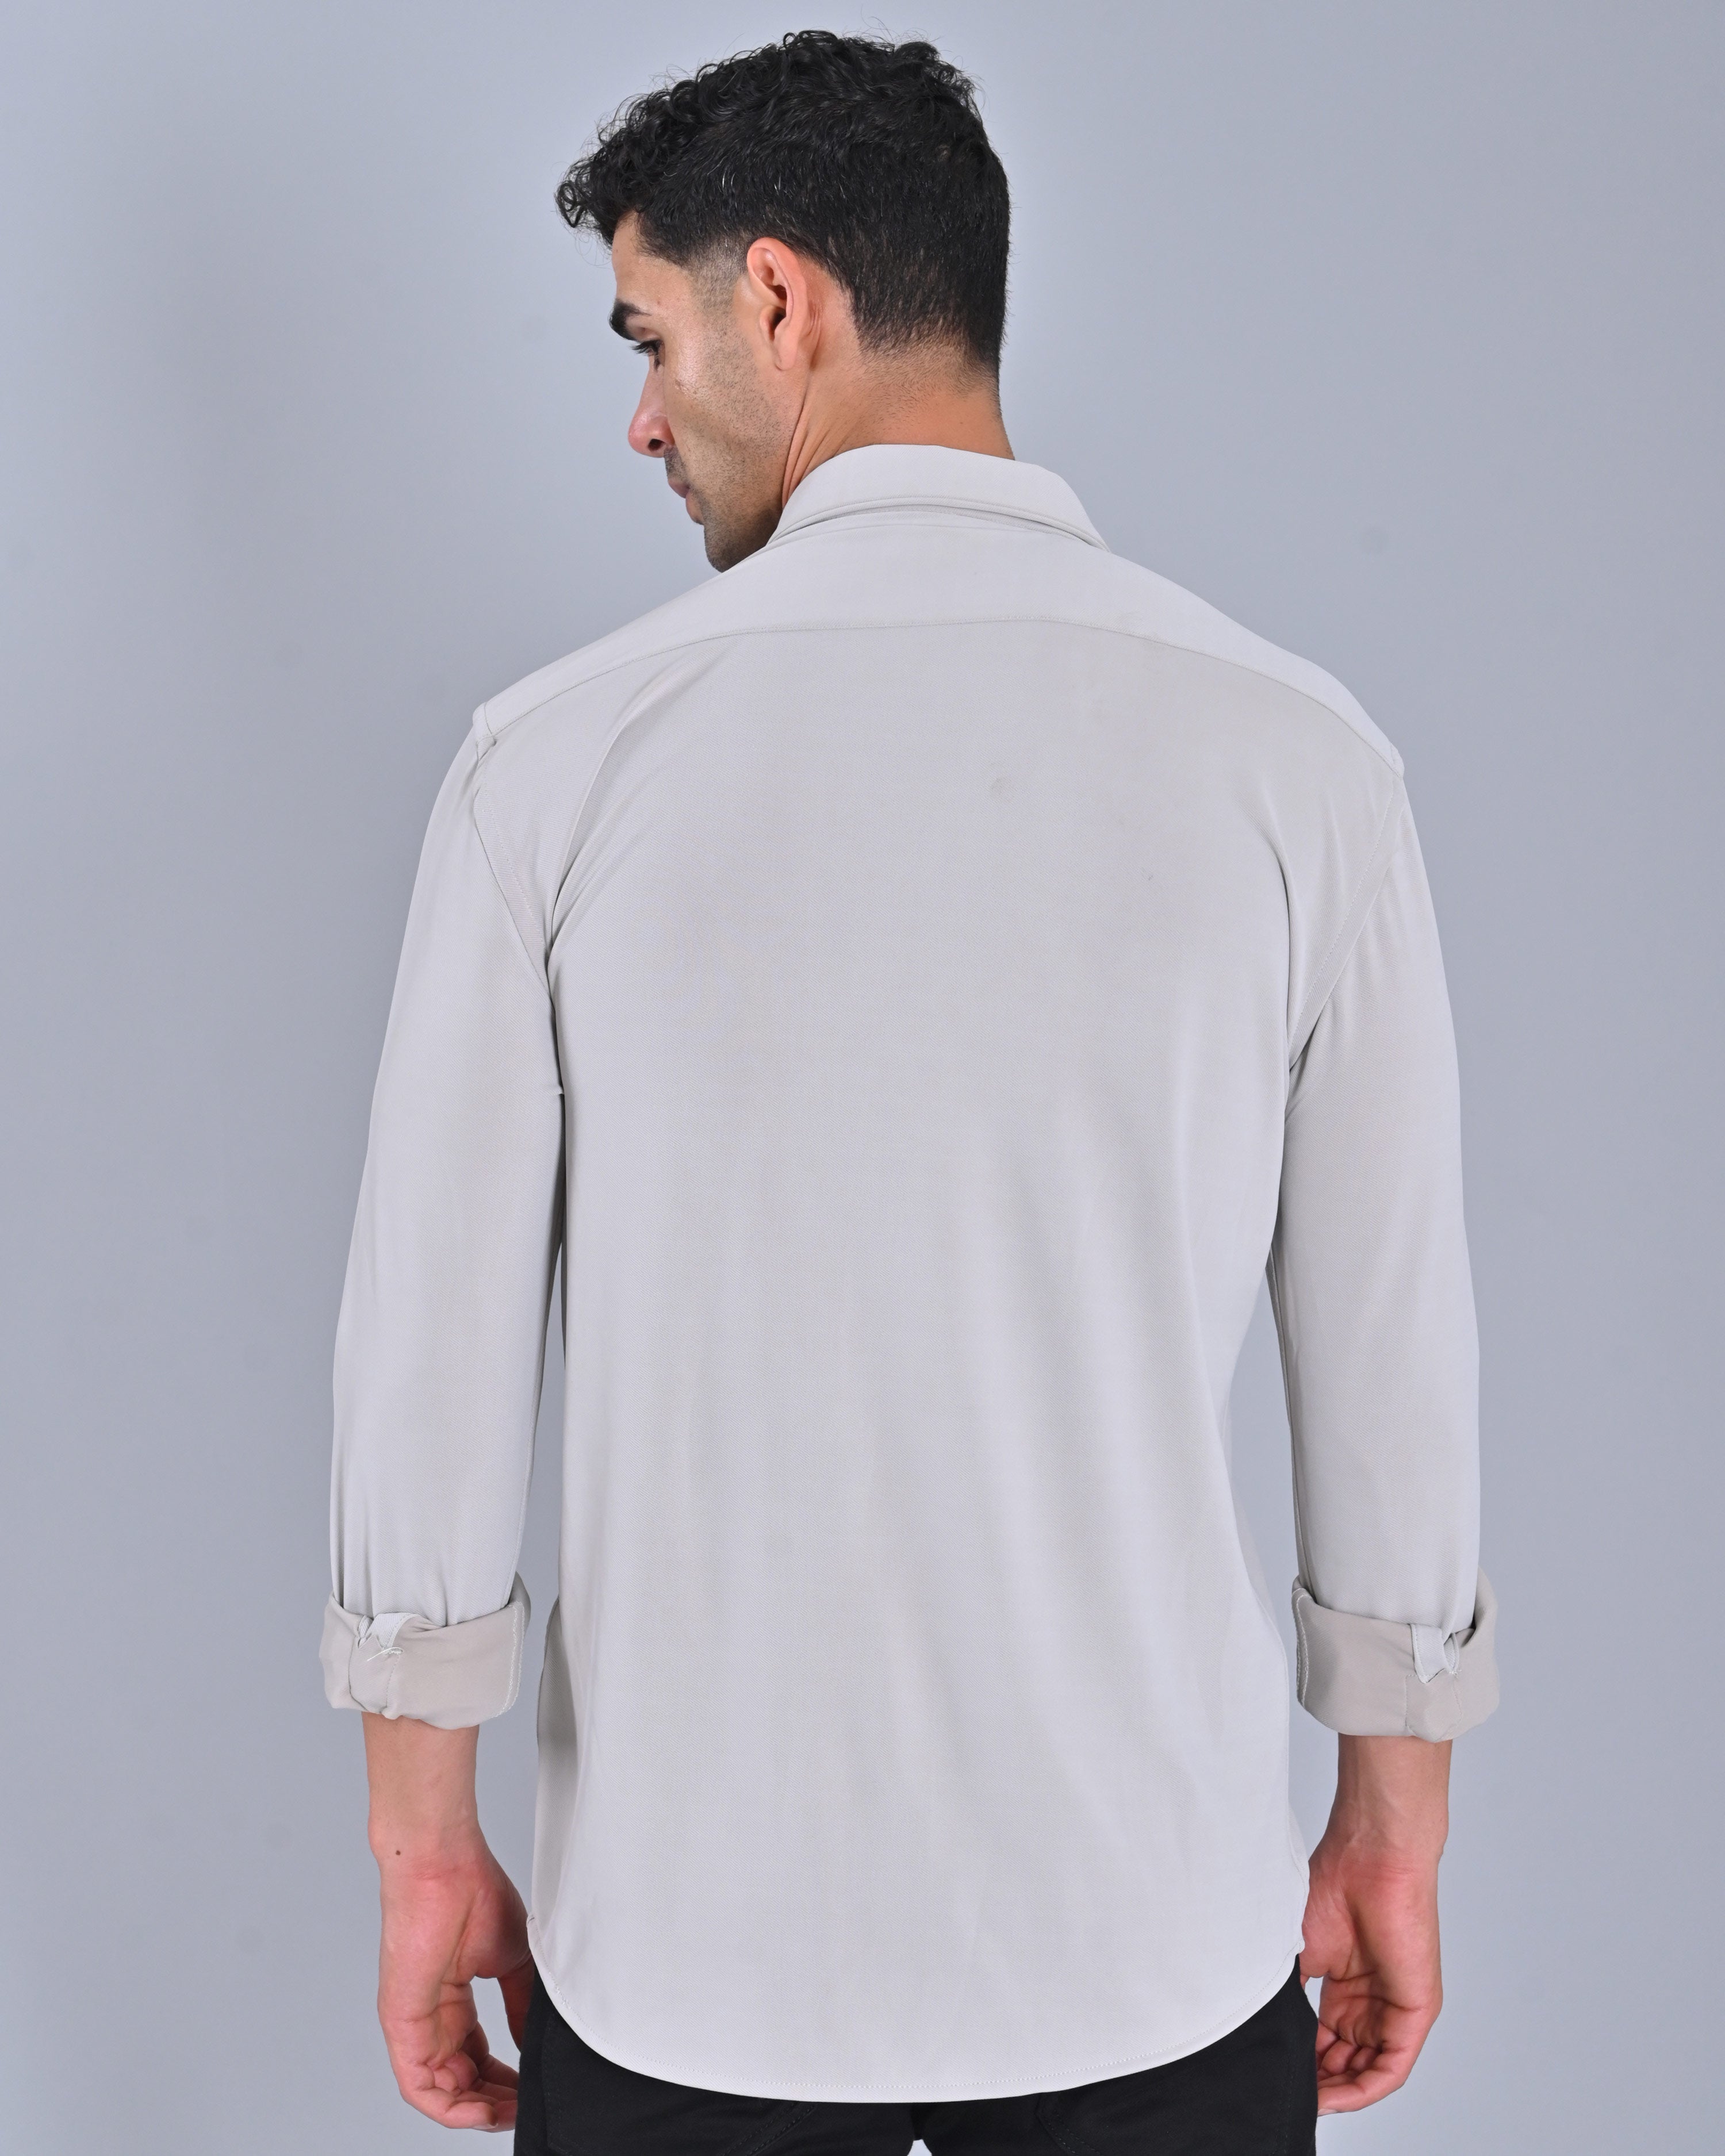 Men's Solid Light Grey Cross Knit Shirt Online